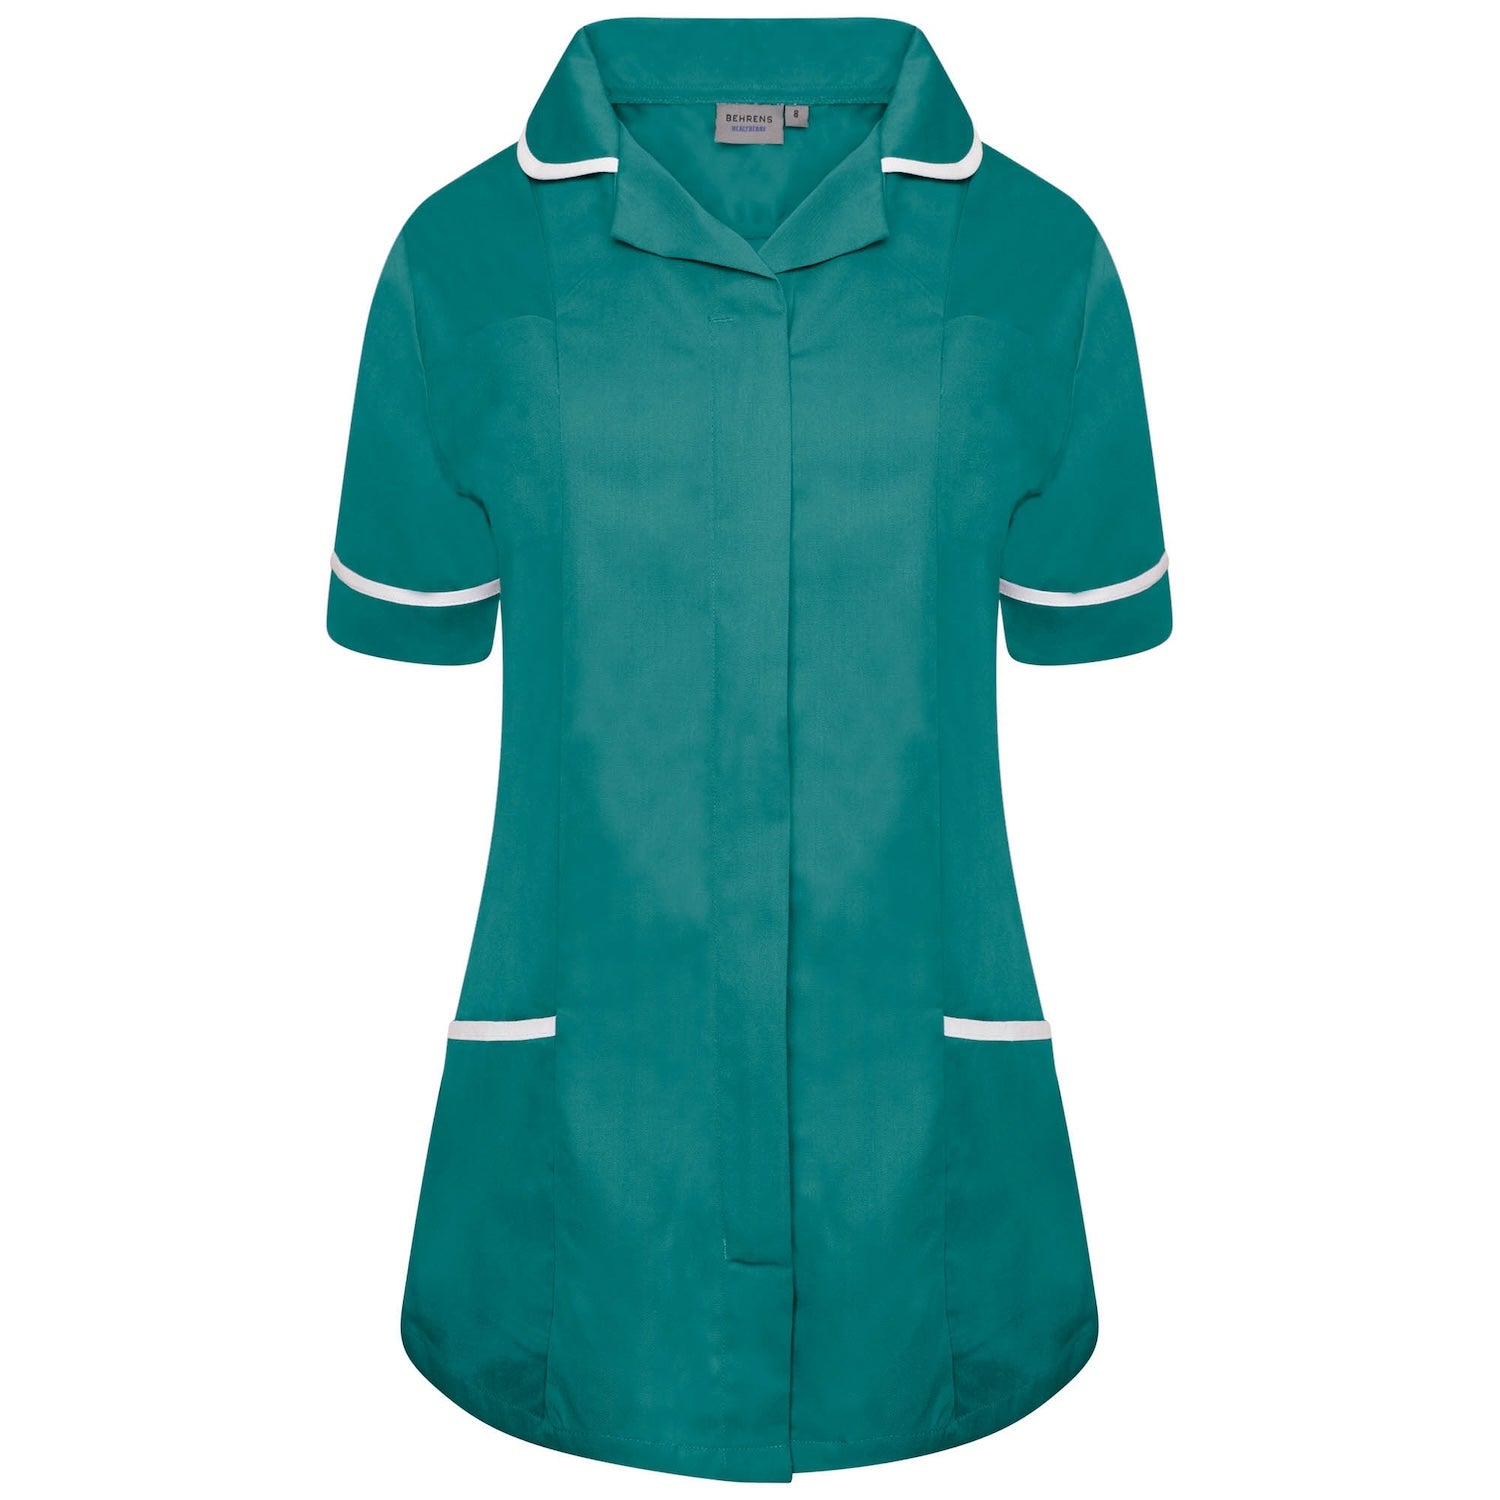 Ladies Healthcare Tunic | Round Collar | Bottle Green/White Trim